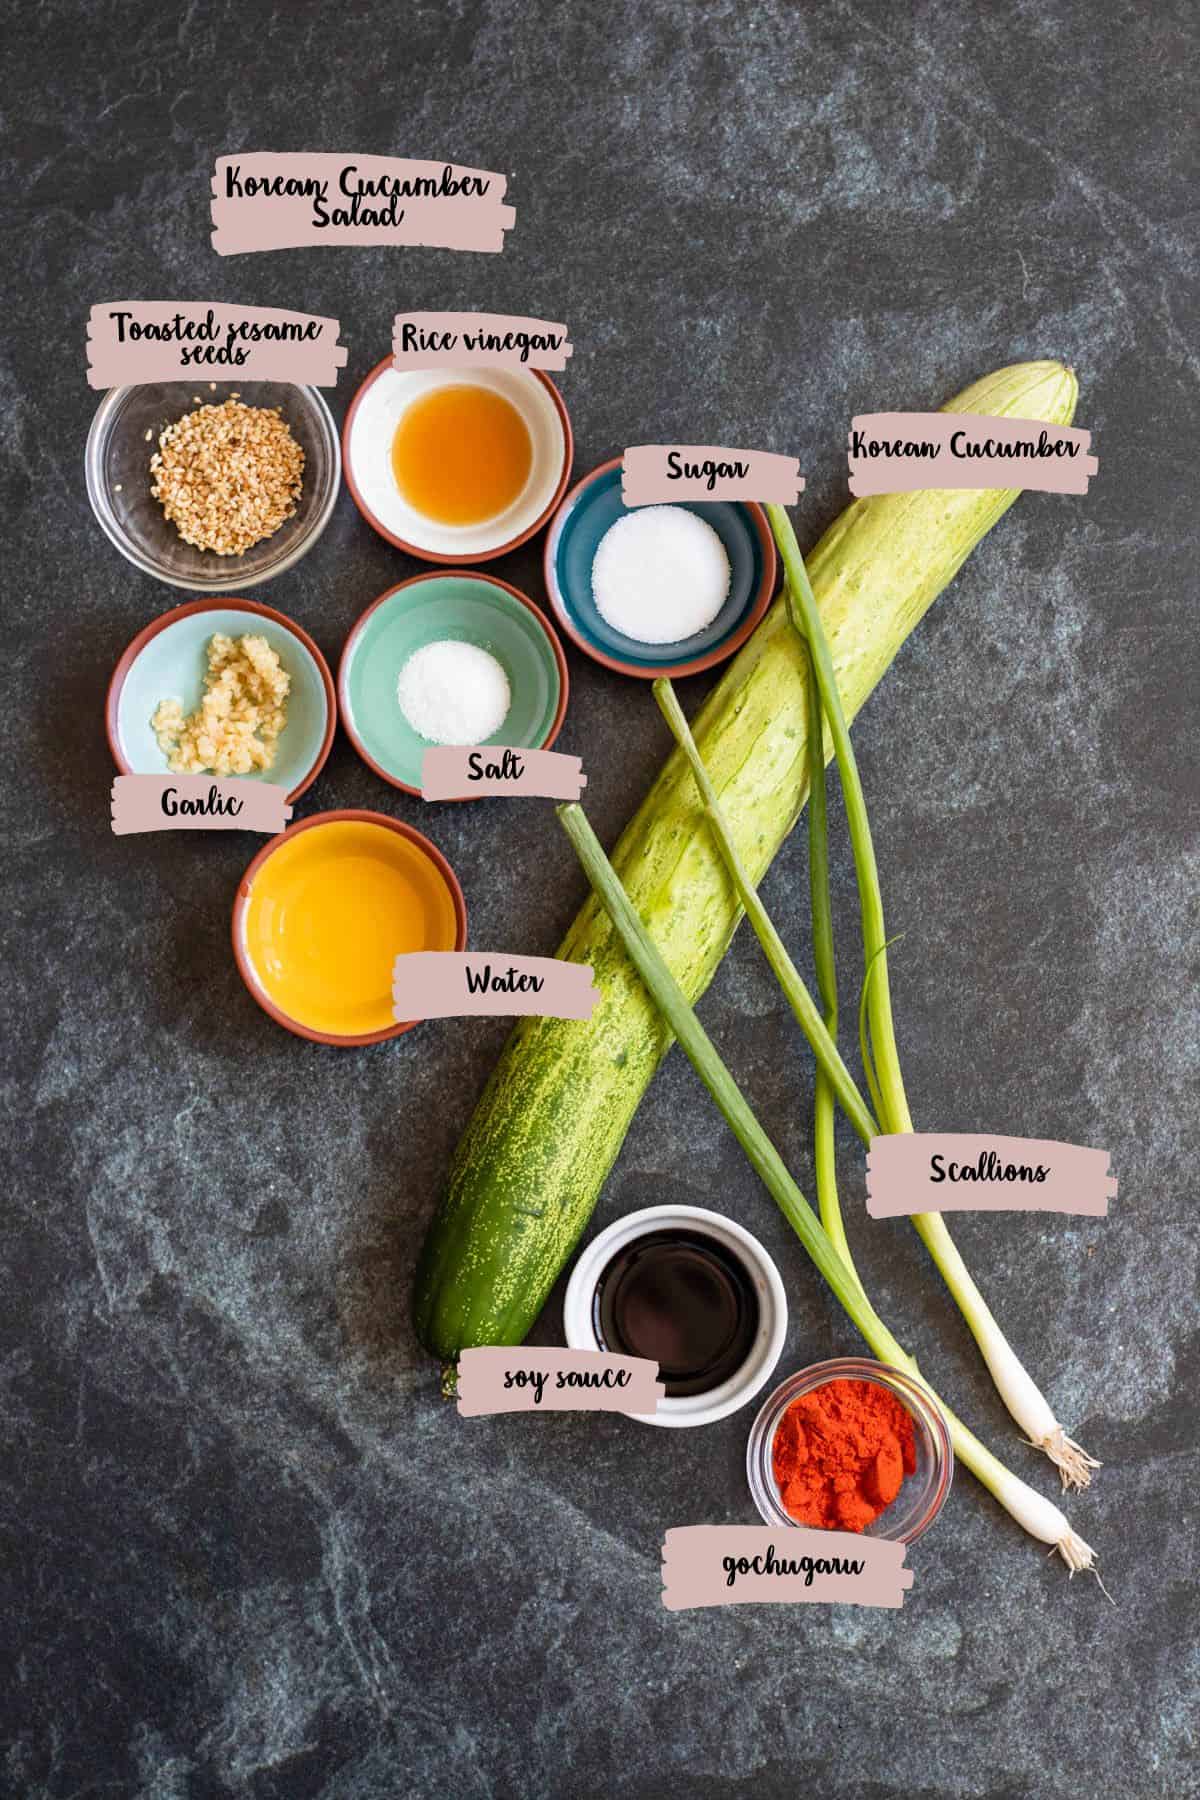 Ingredients shown needed to make korean cucumber salad. 